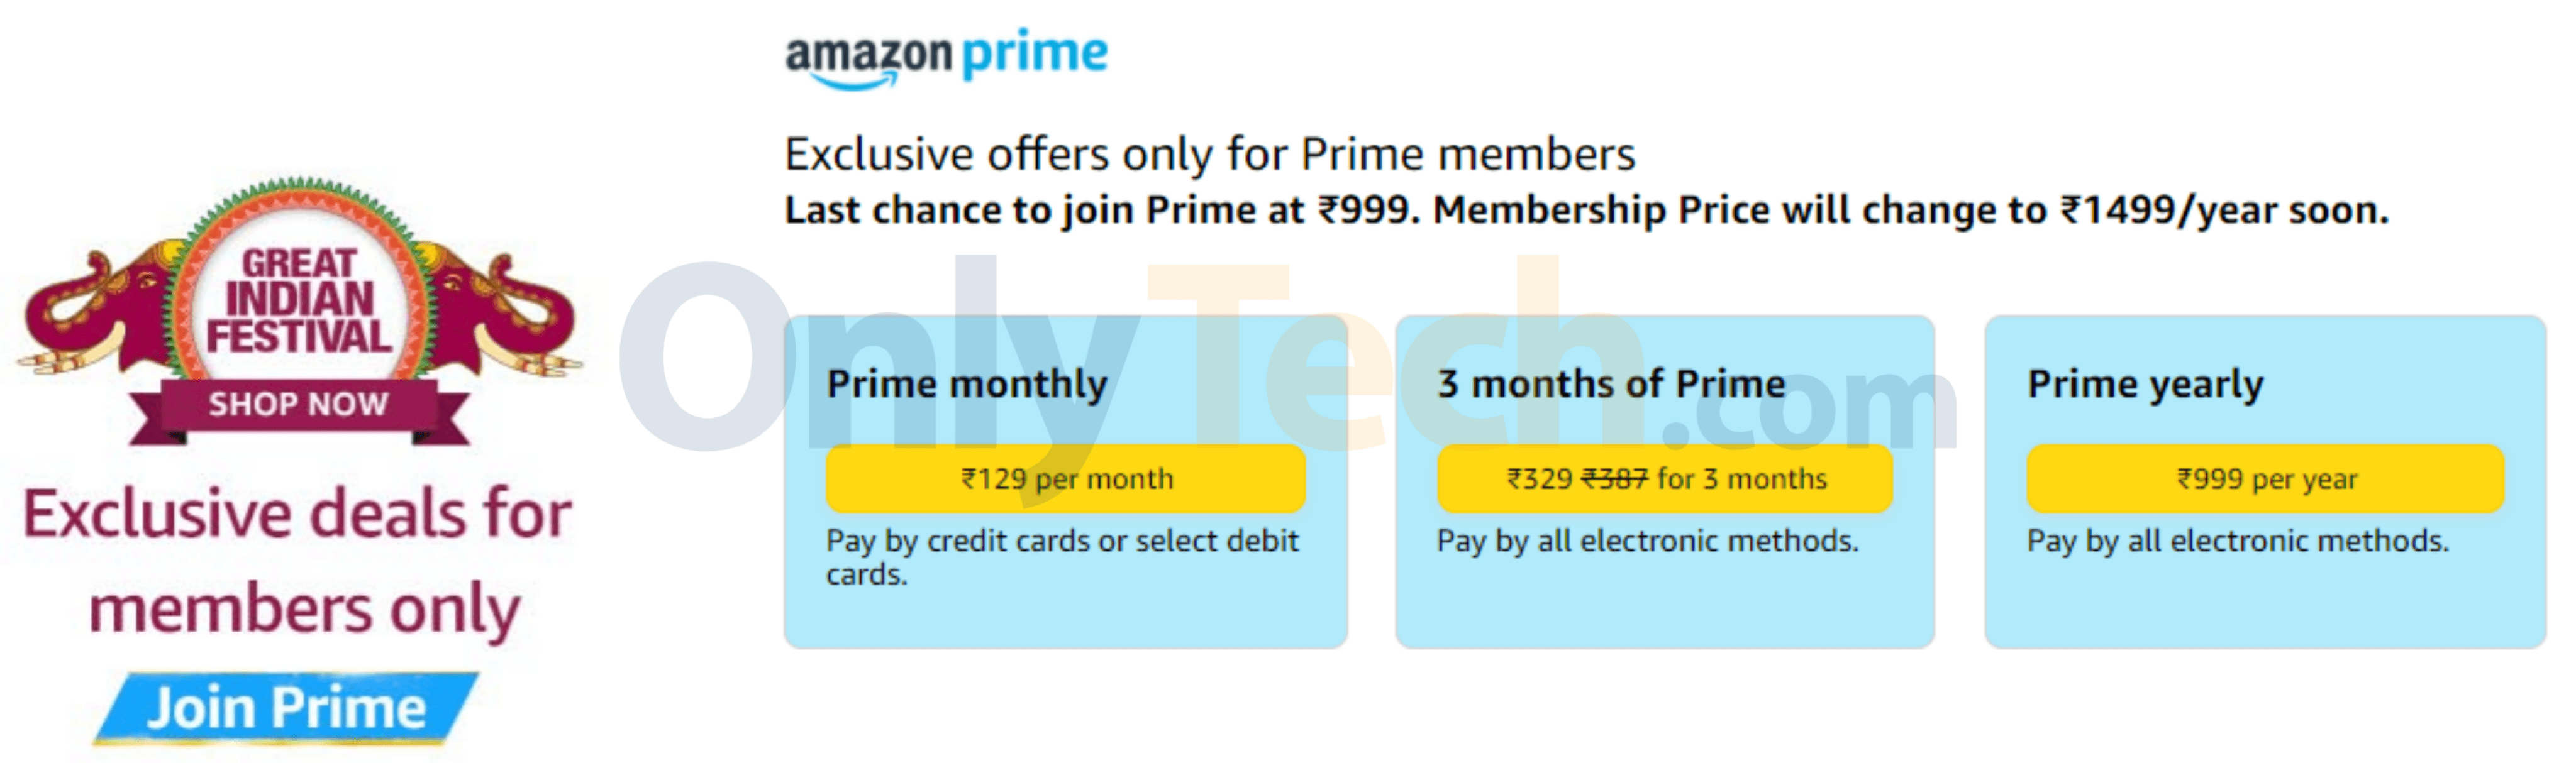 Amazon increasing the cost of Prime Membership in India